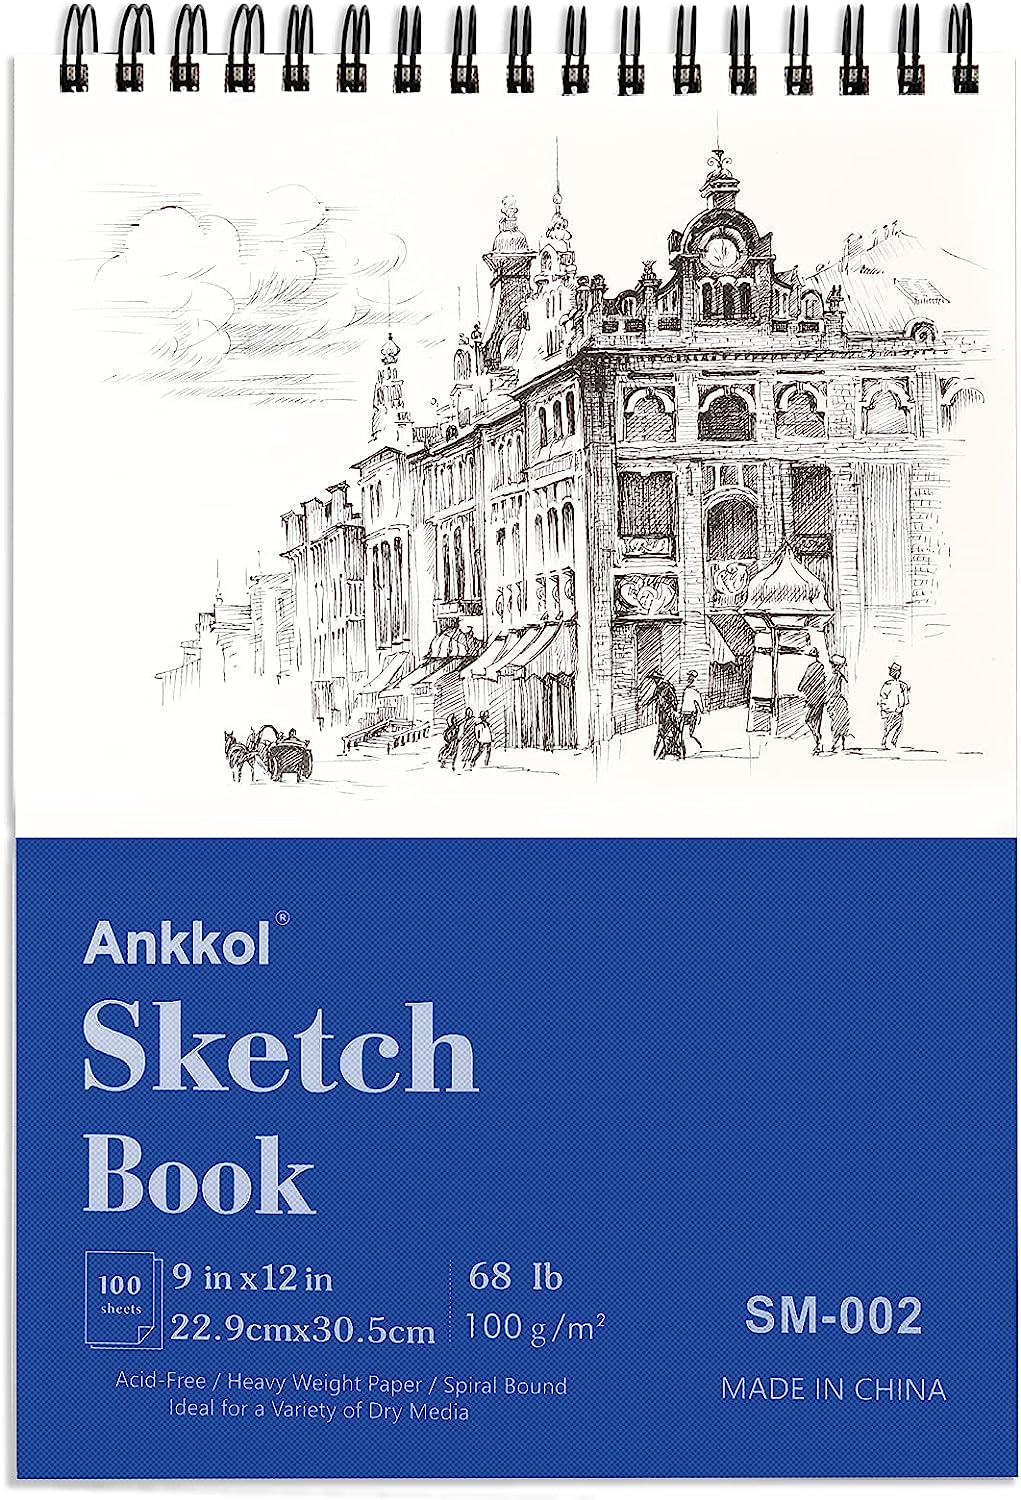 Ankkol Sketch Book 9x12 Inch Artist Sketch Pad